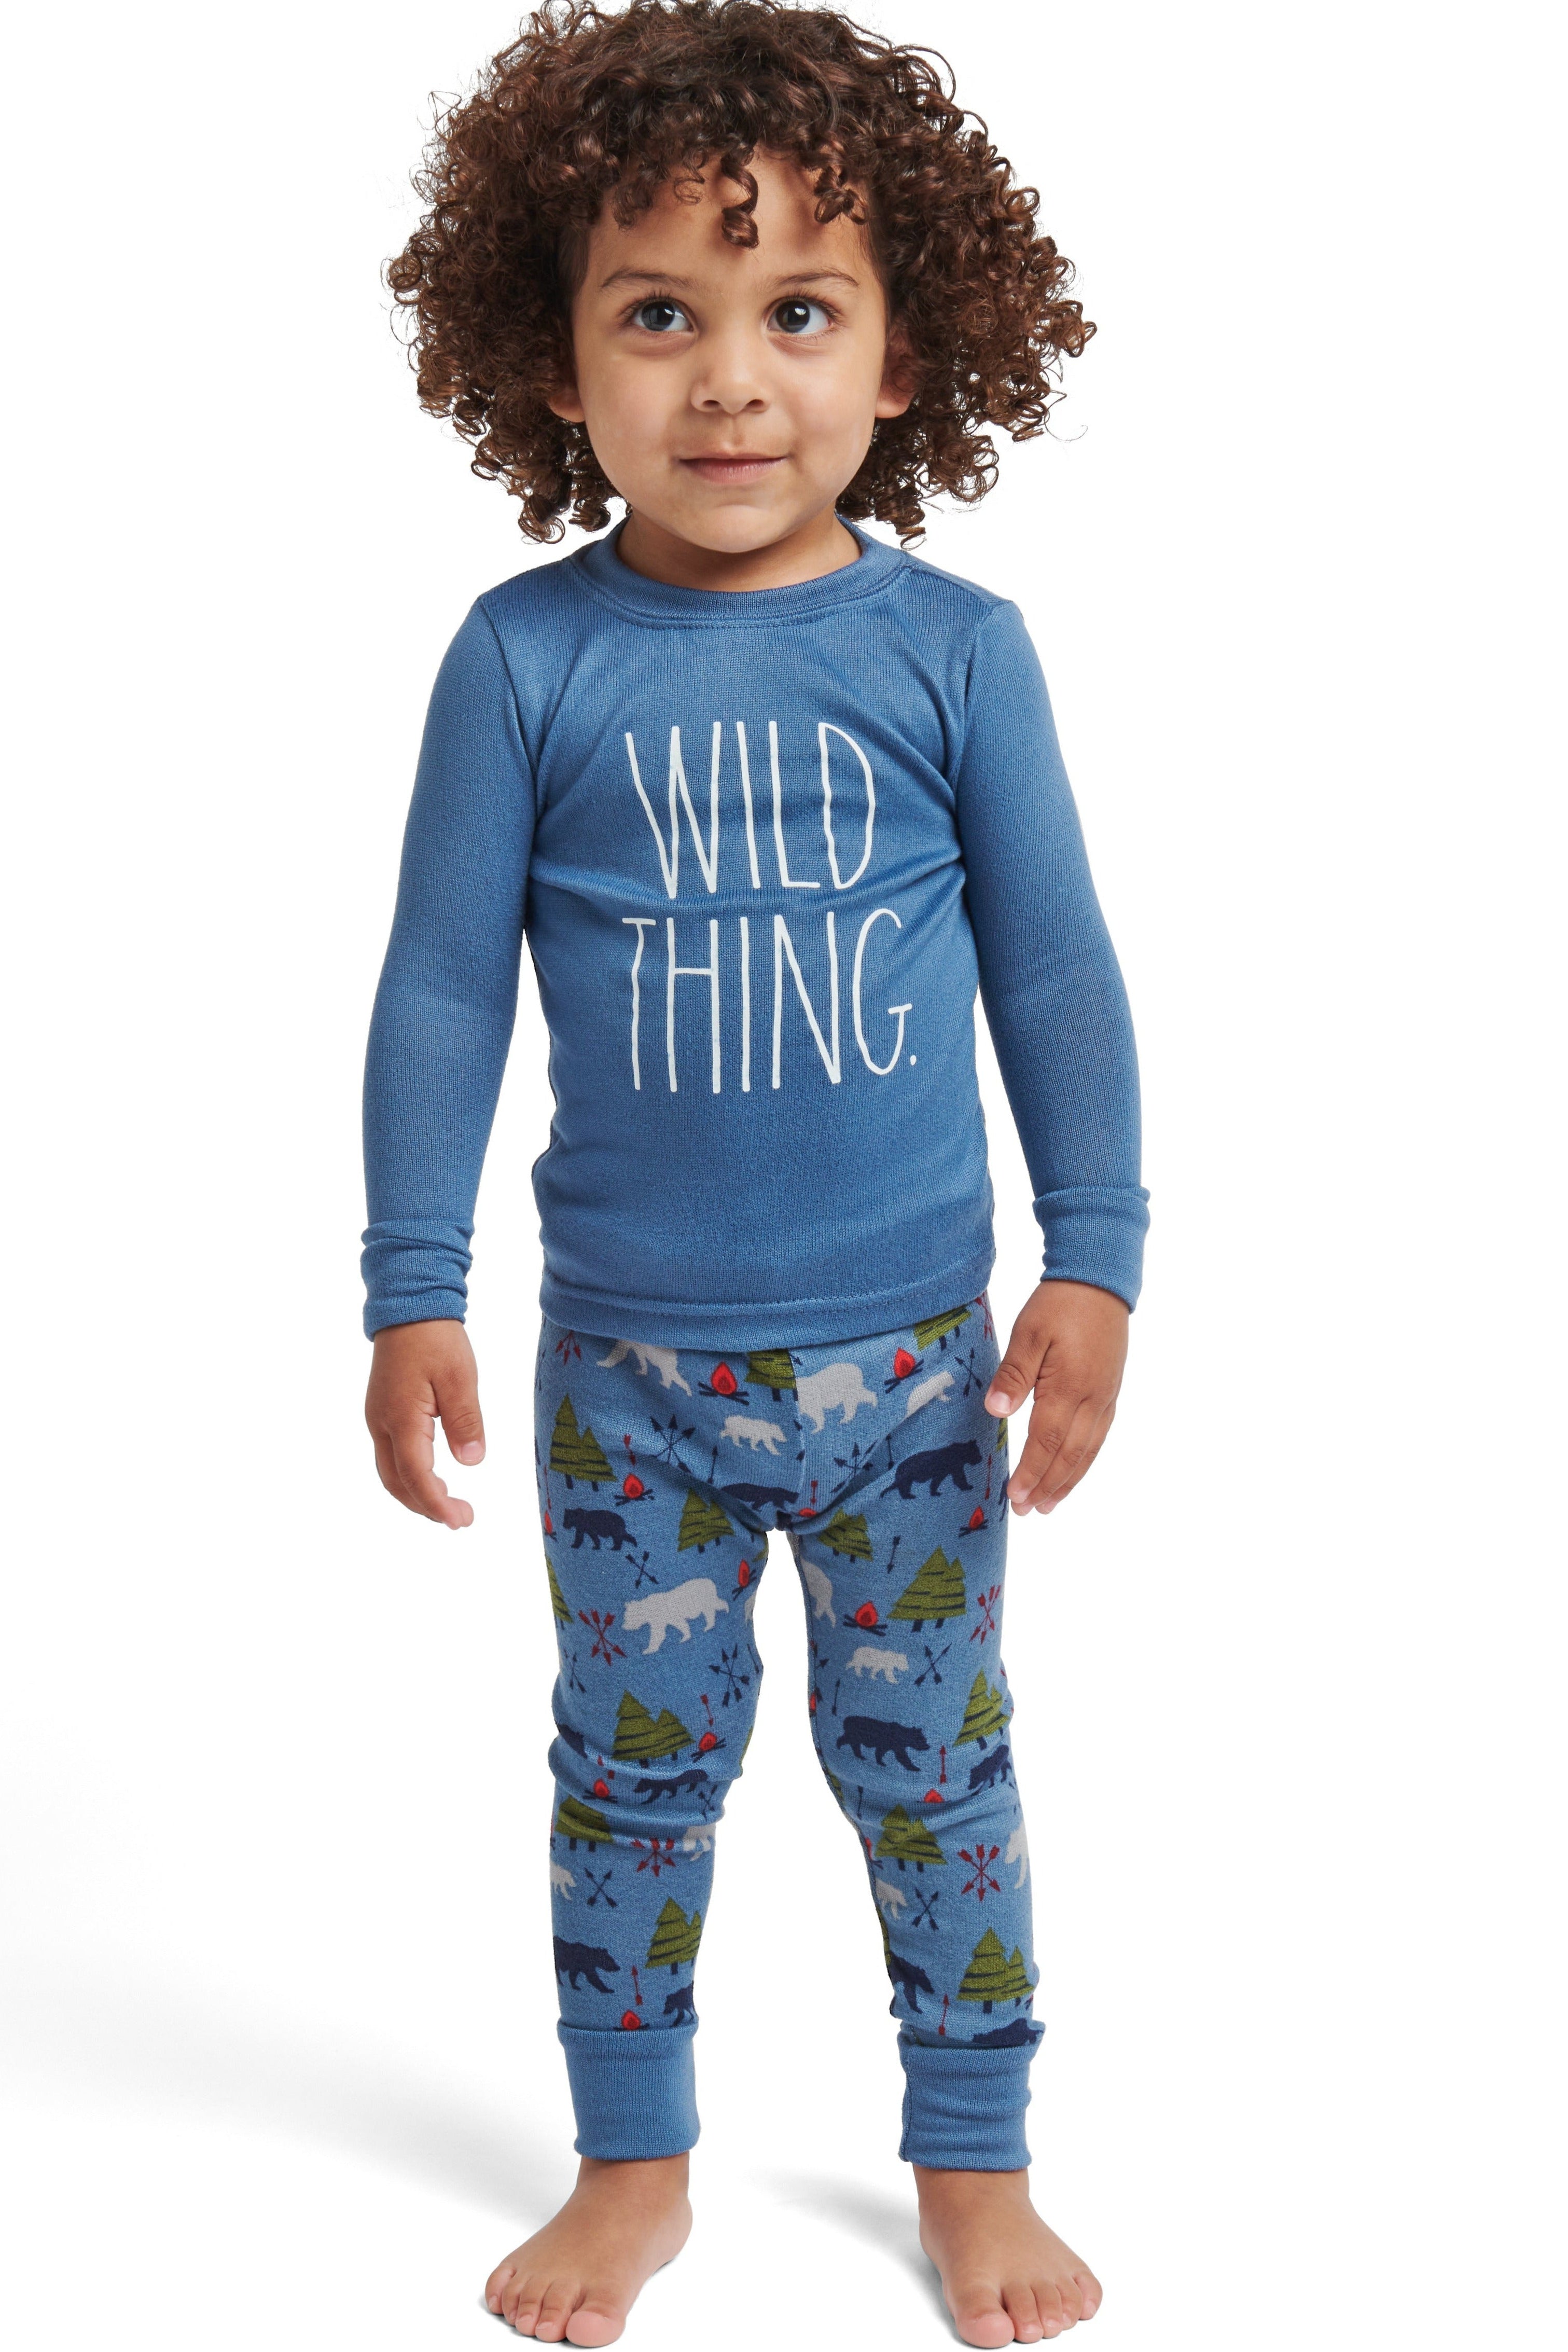 Boys' "WILD THING" Long Sleeve Top and Joggers Pajama Set - Rae Dunn Wear